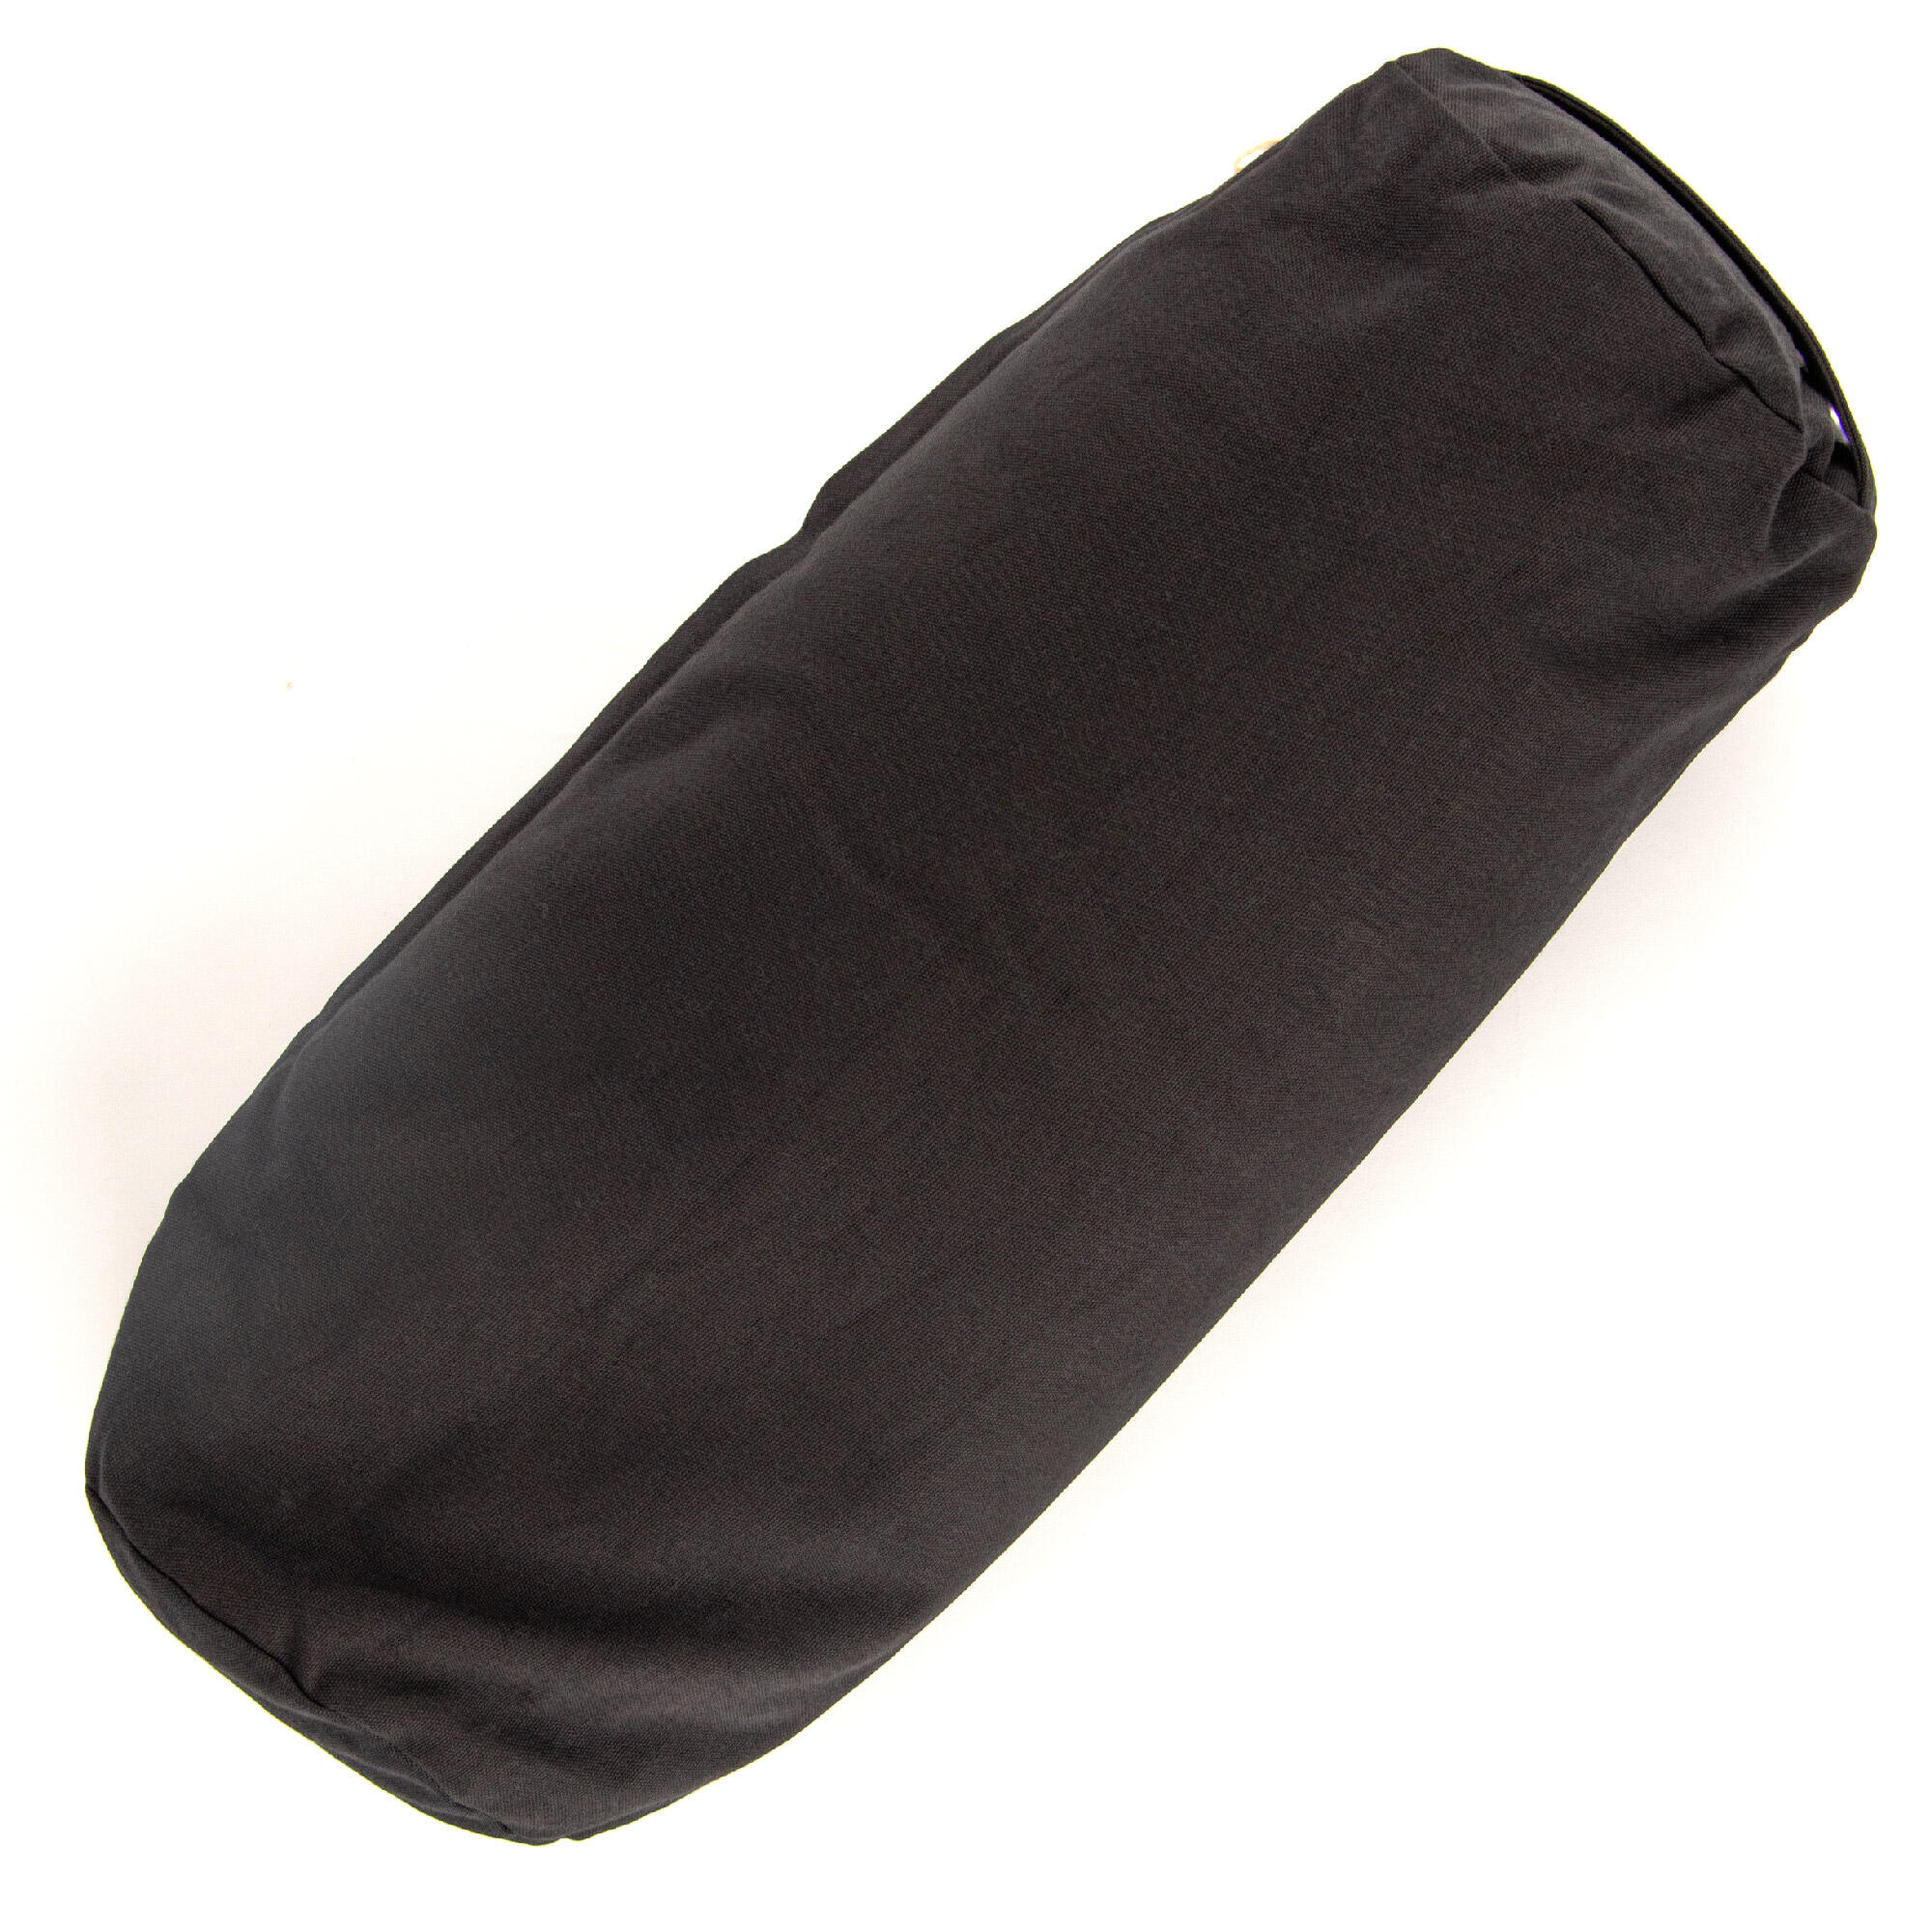 Myga Support Bolster Pillow - Black 1/8